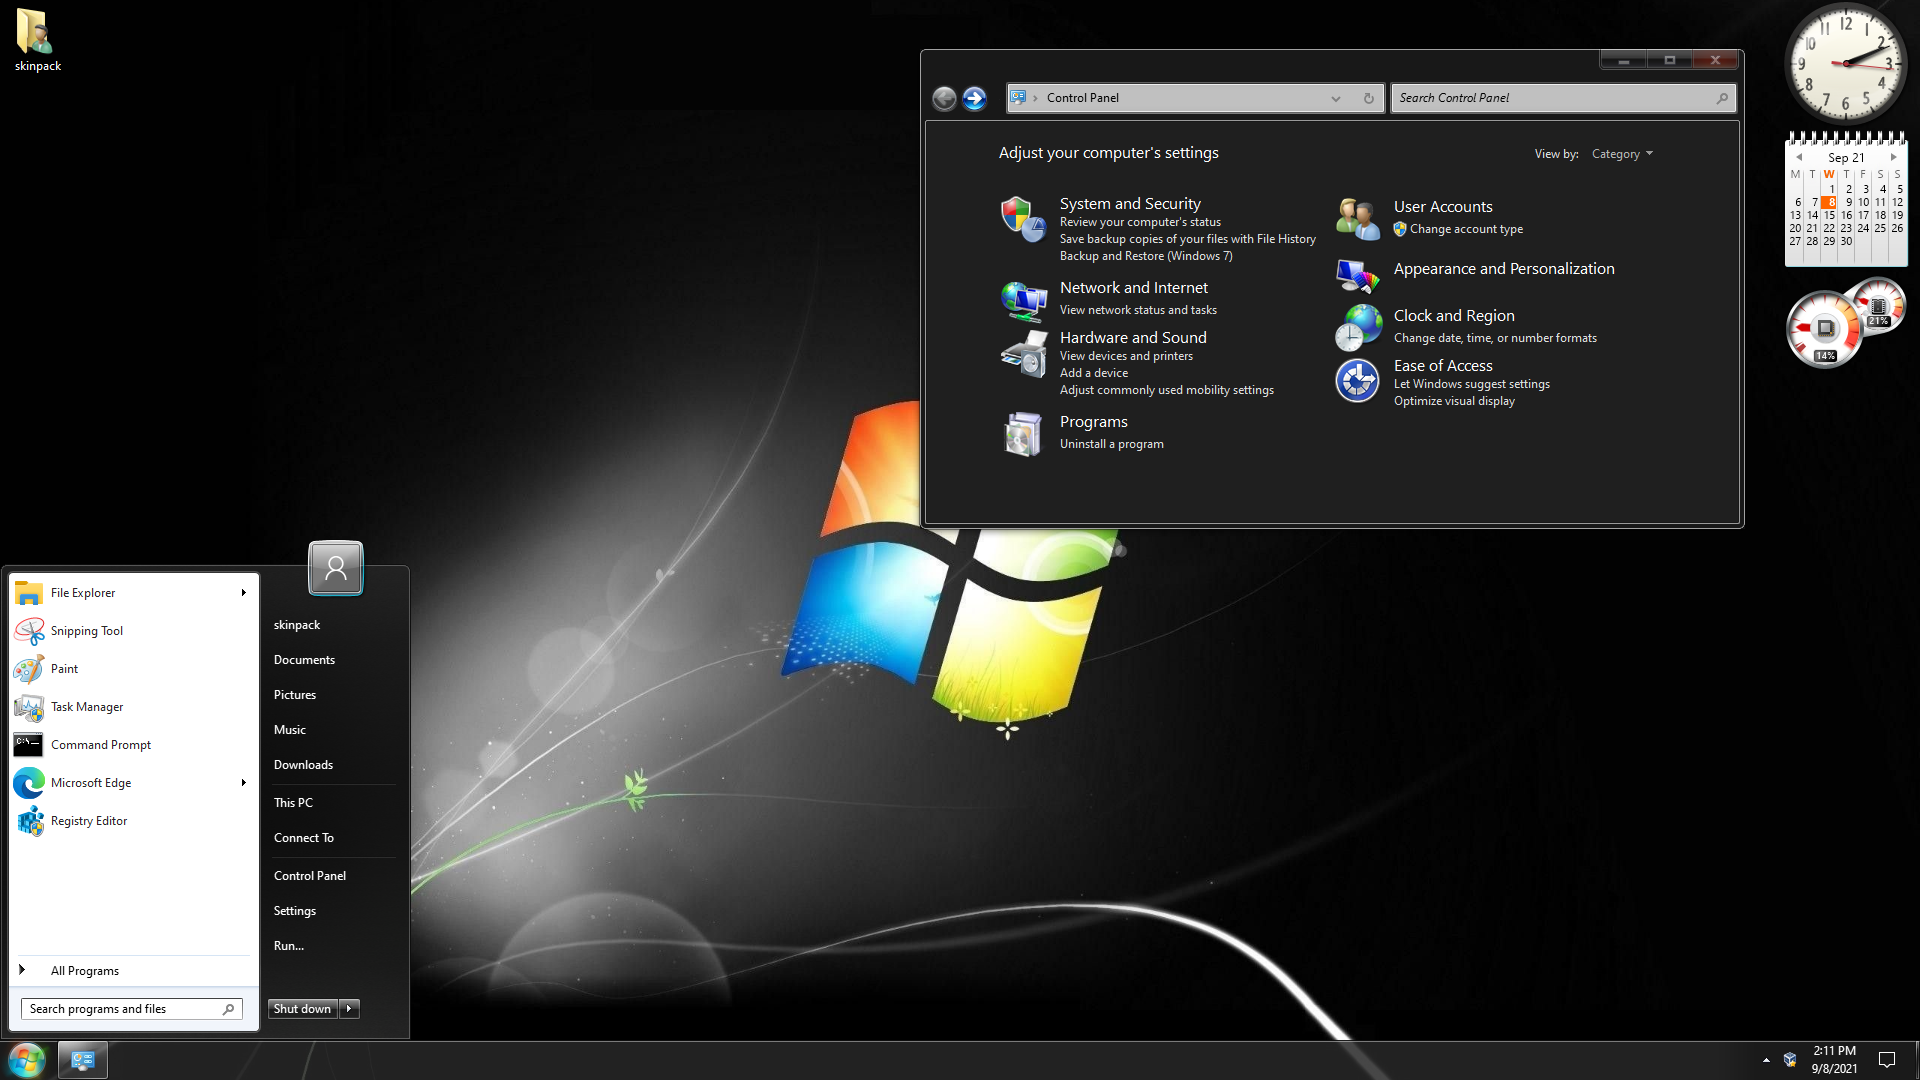 Windows 7 Black Edition Free Download Full Version